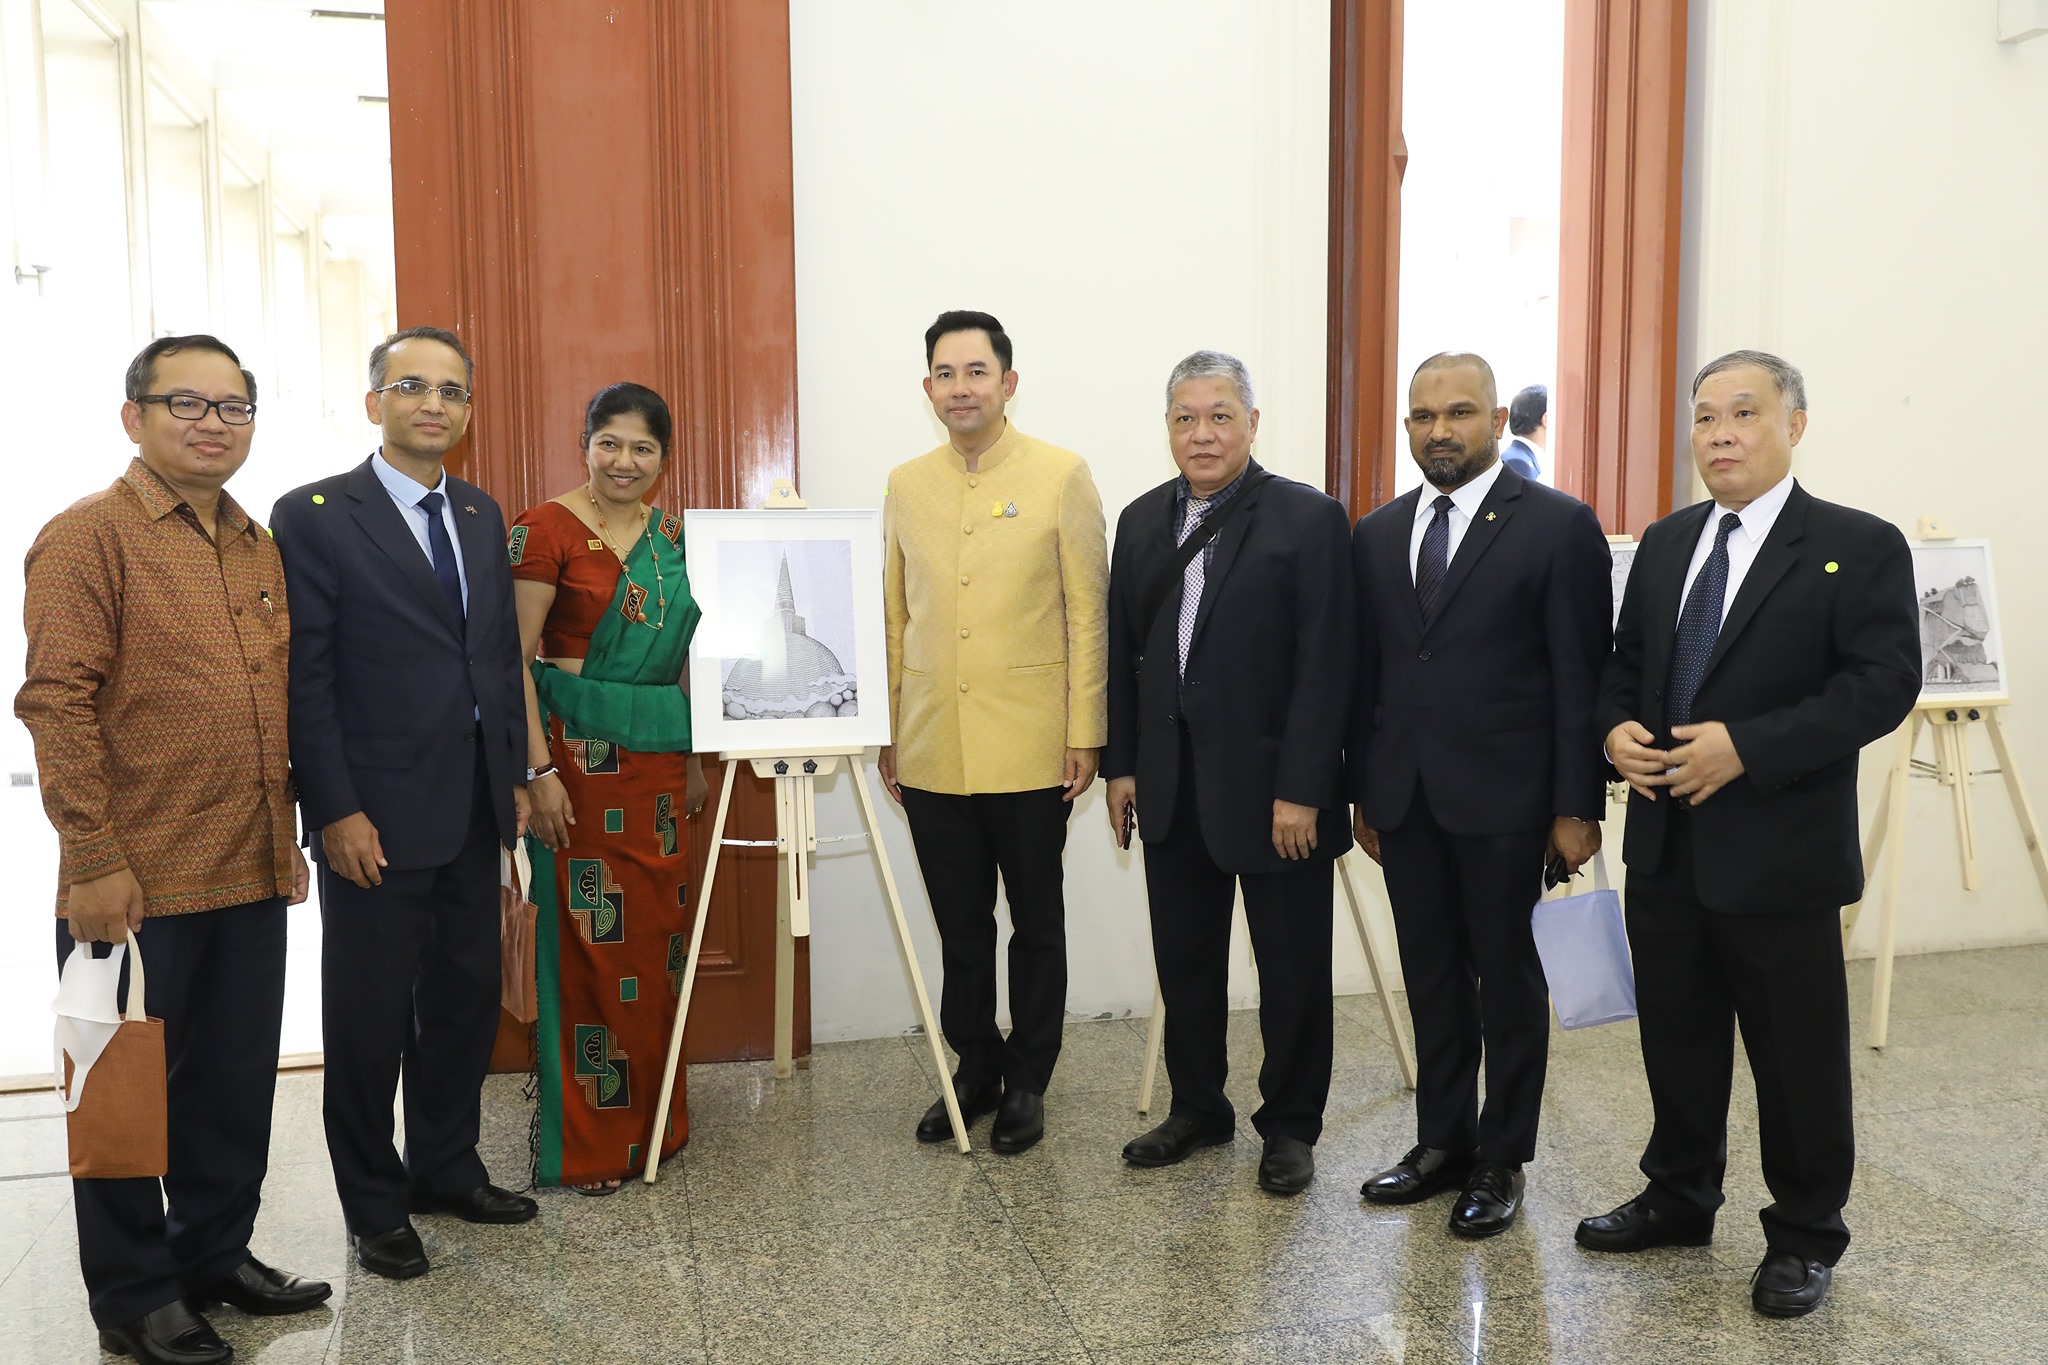 Mini Exhibition of 'Yukyur Art' Inspired by Sri Lanka held in Bangkok